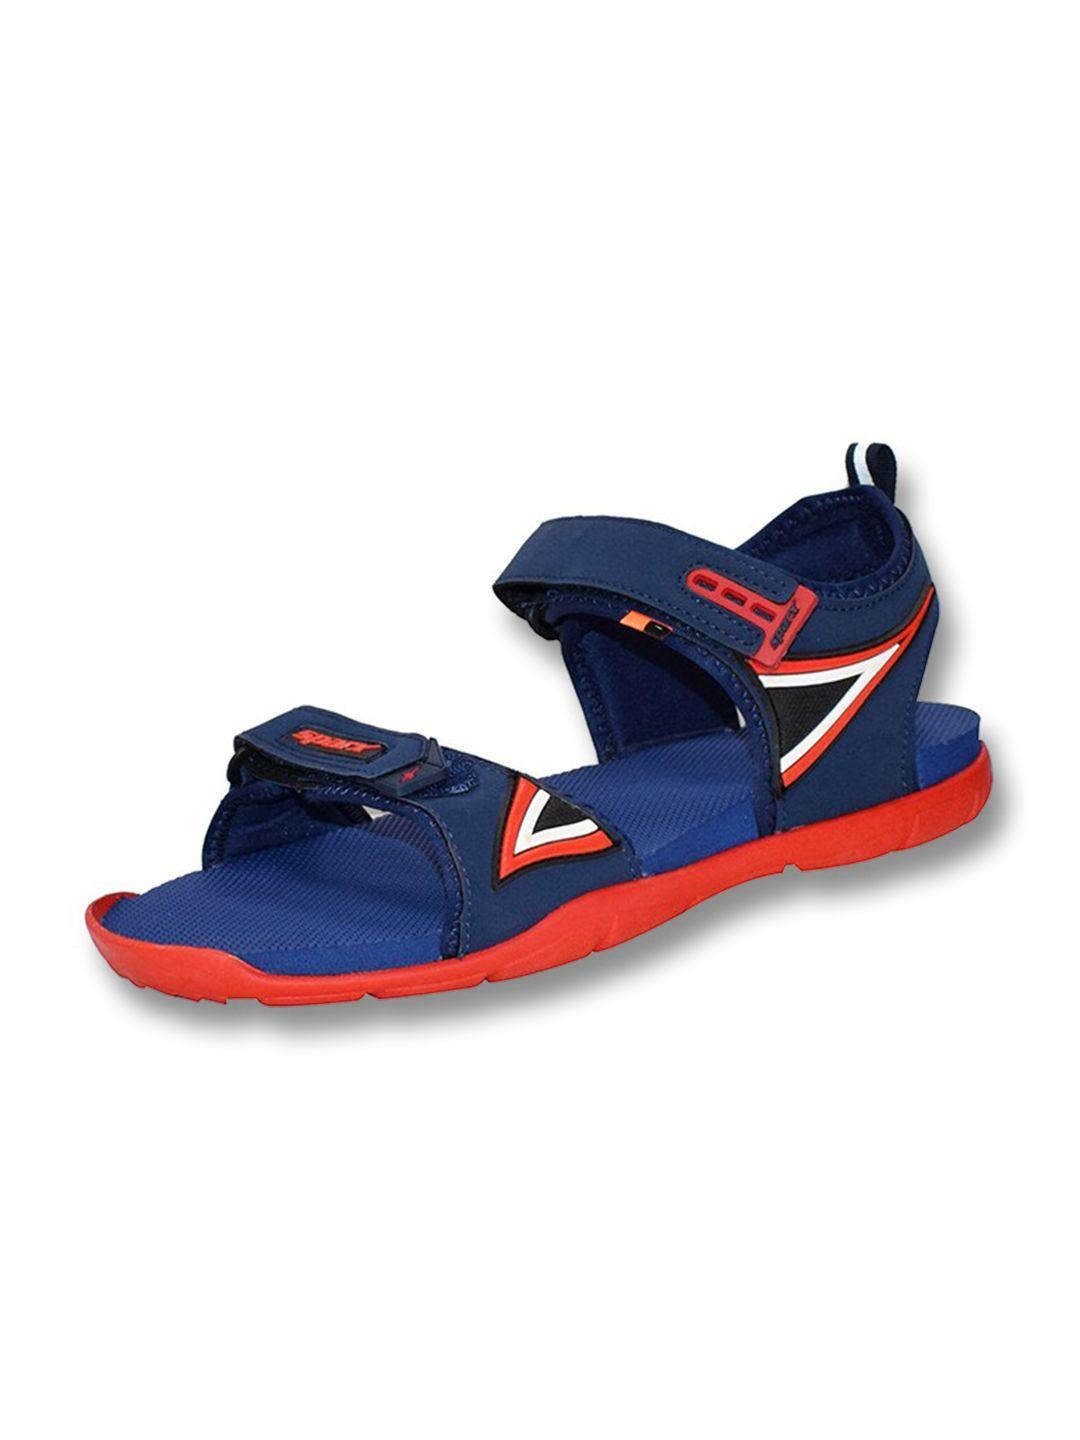 sparx boys navy blue & red comfort sandals